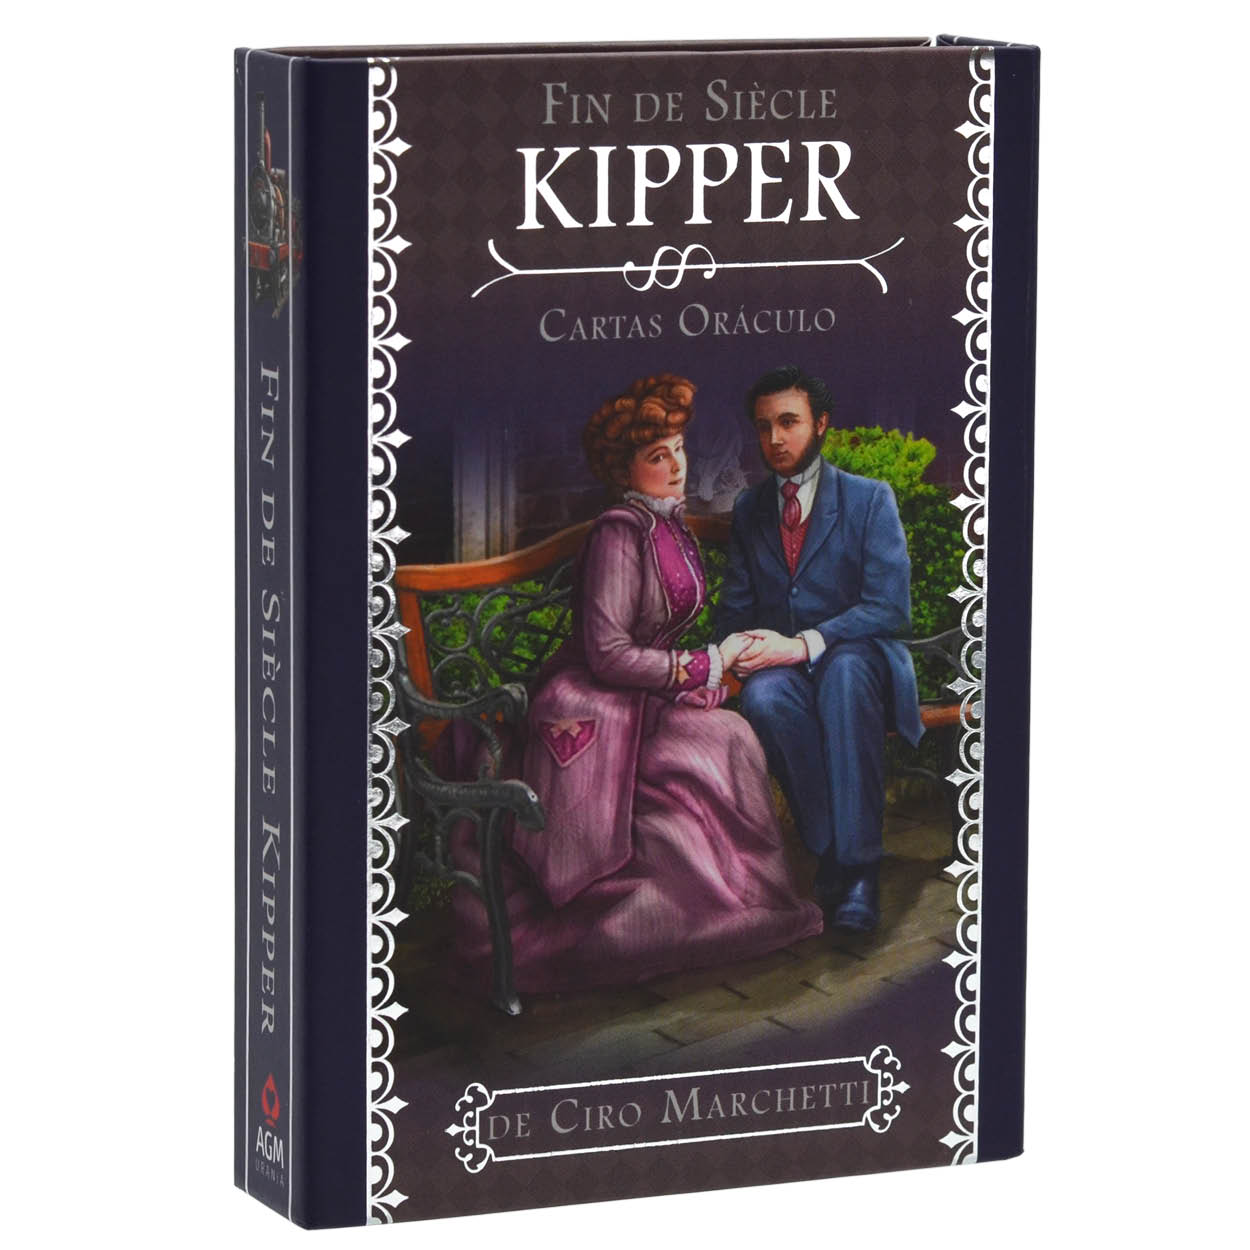 Fin de Siècle Kipper Spanish edition